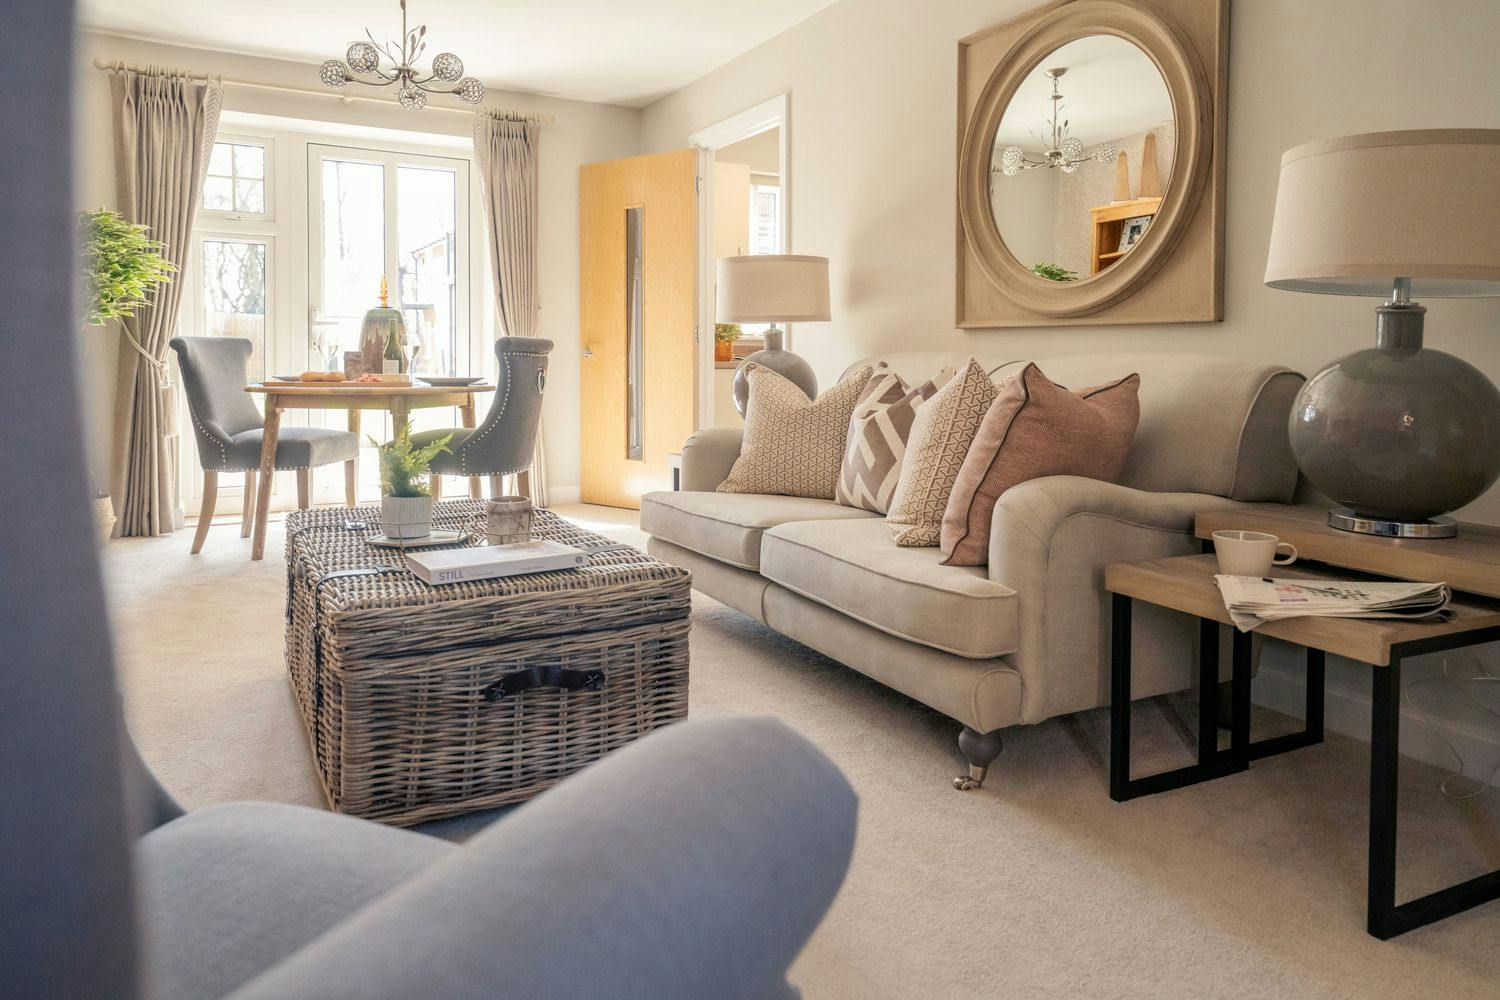 Living Room at Bowes Lyon Court Retirement Development in Dorset, Dorchester